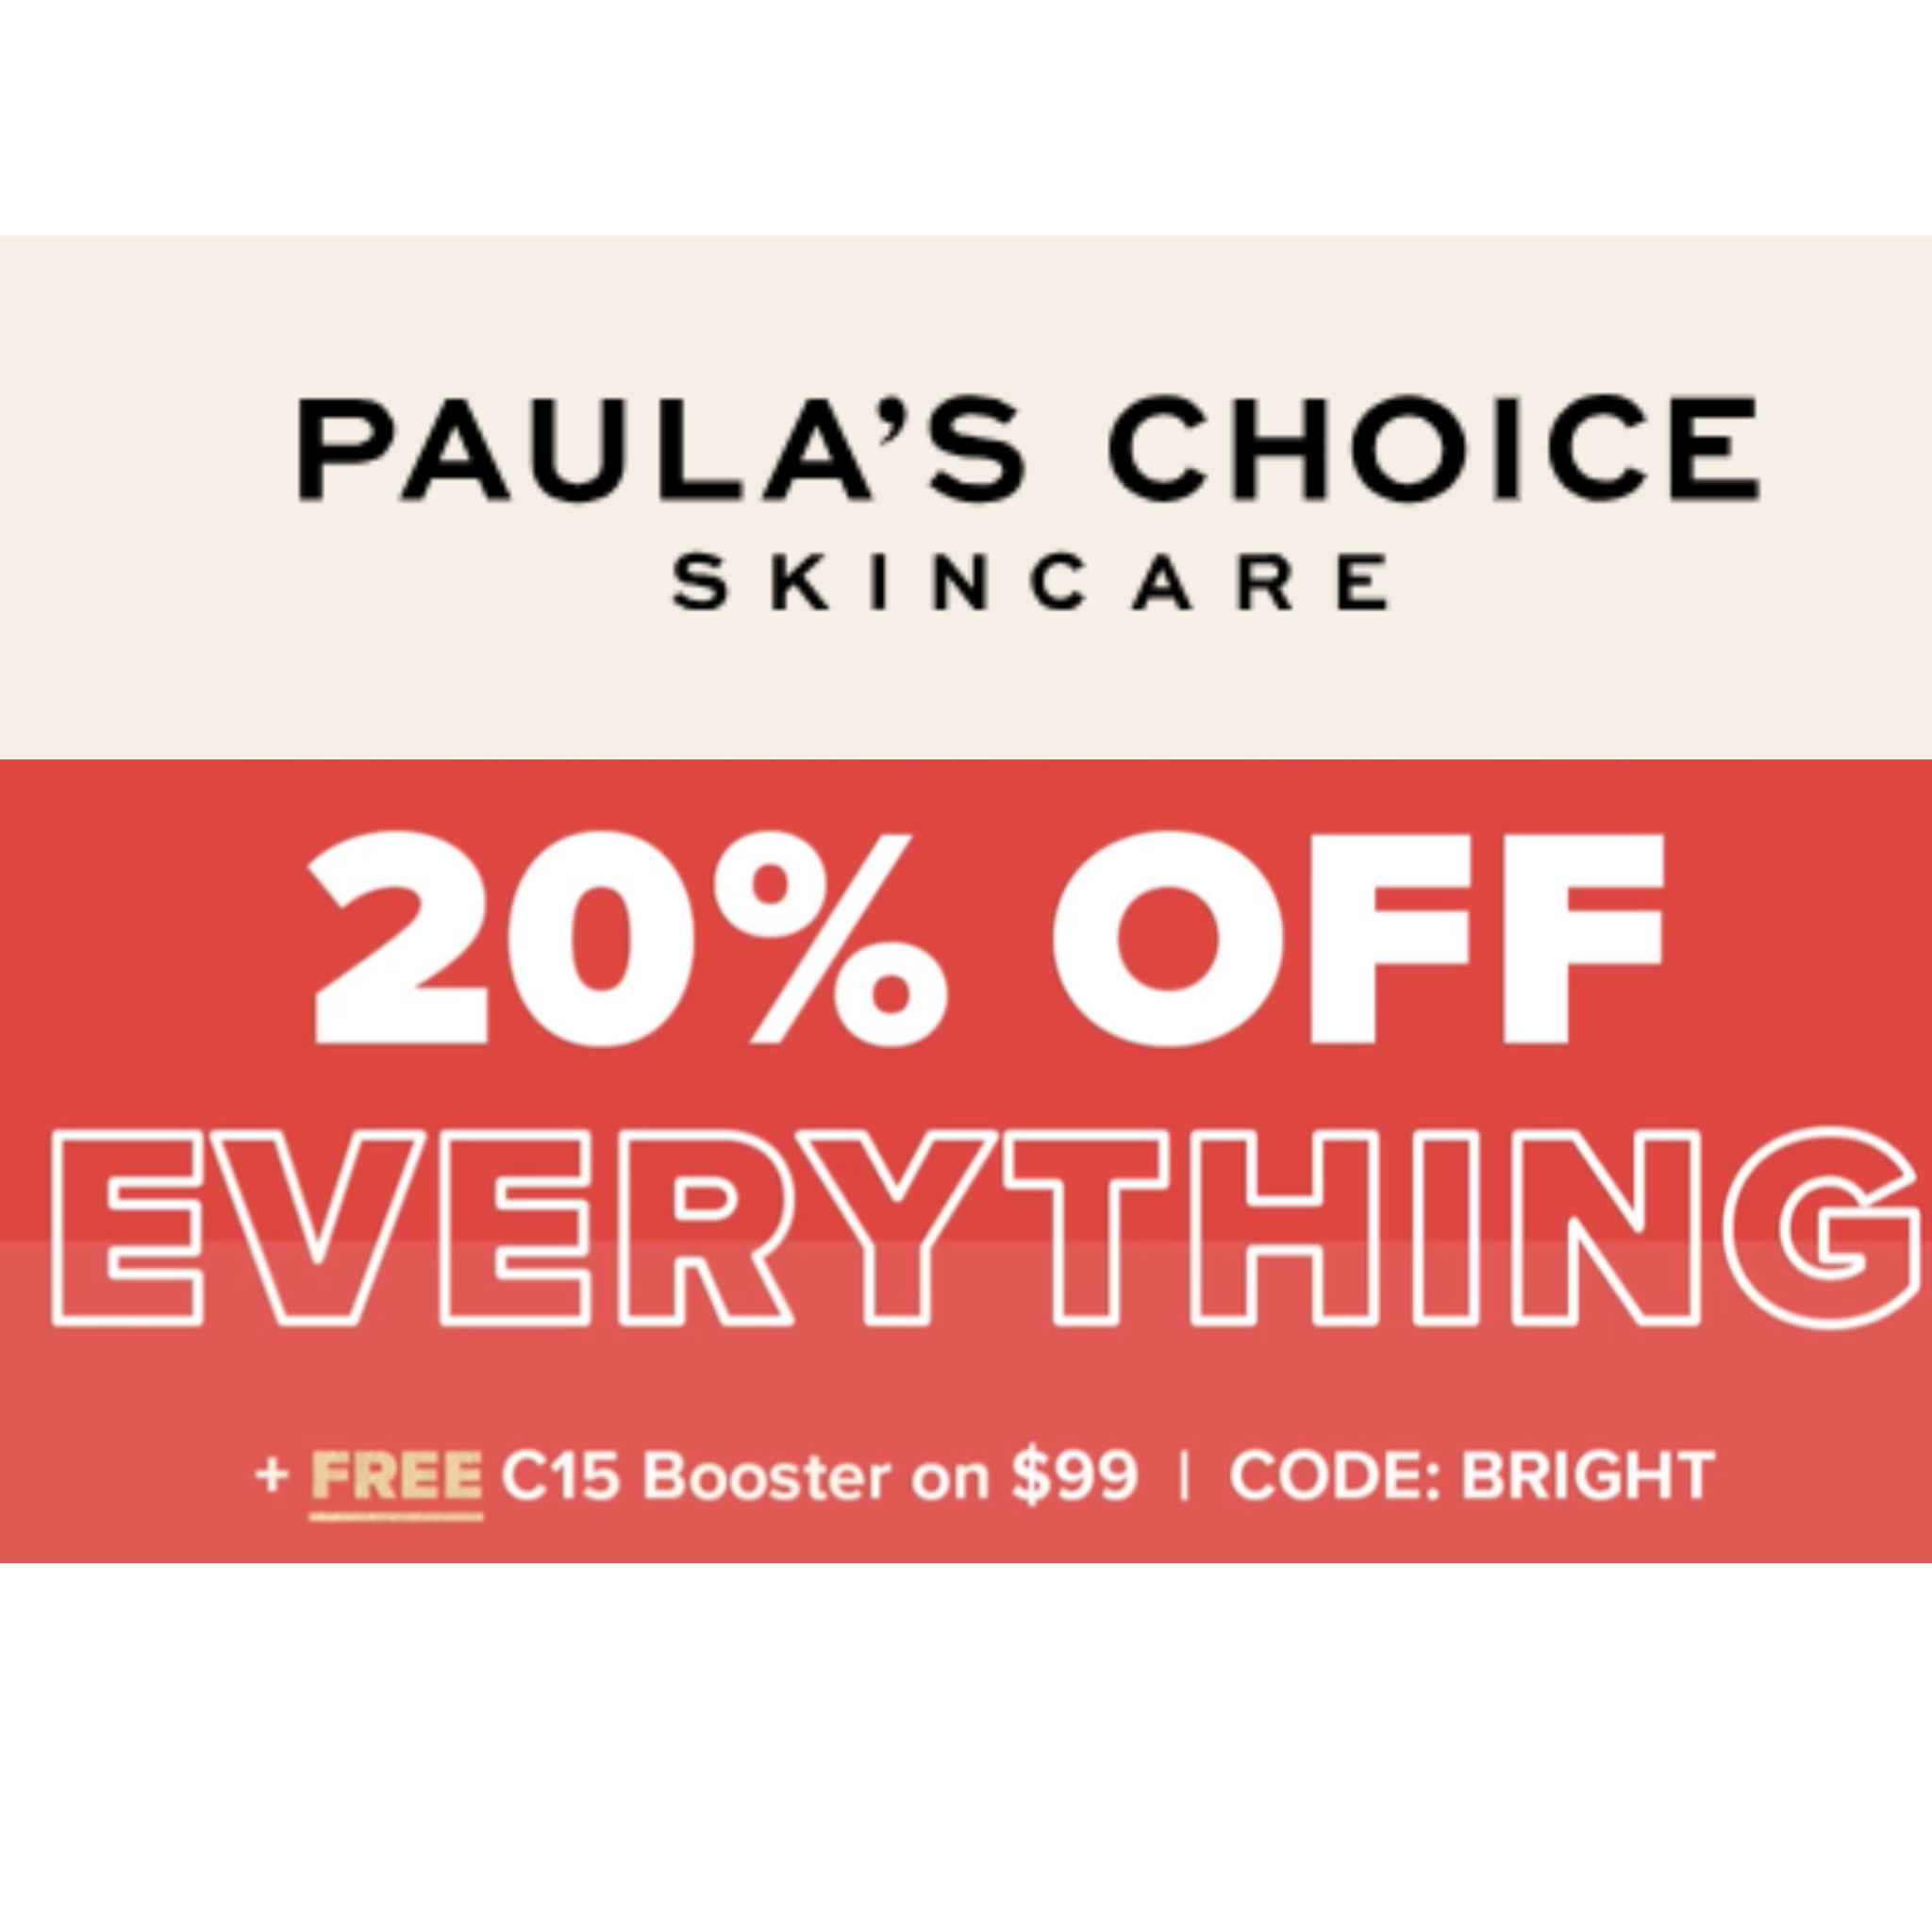 Paula's Choice - 20% OFF EVERYTHING! + FREE GIFT!